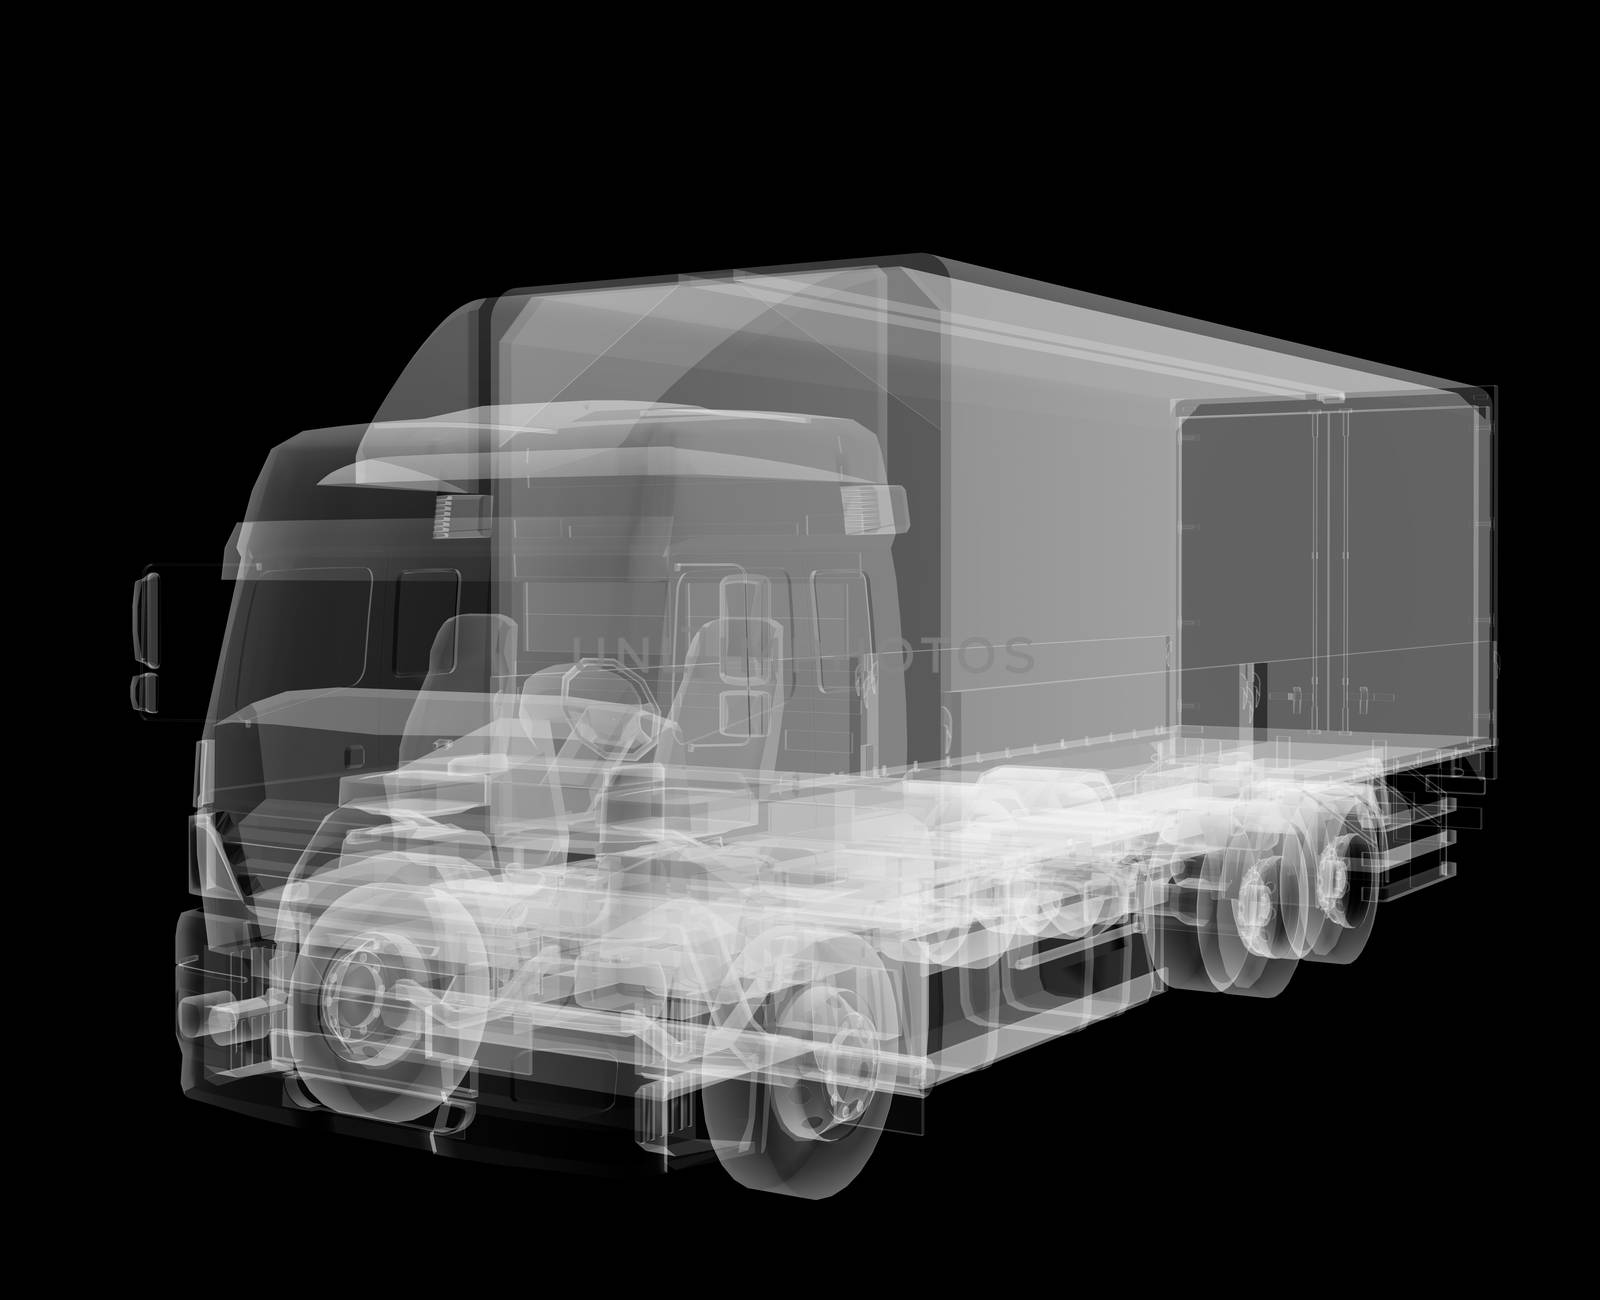 Truck x-ray on black background. 3D illustration